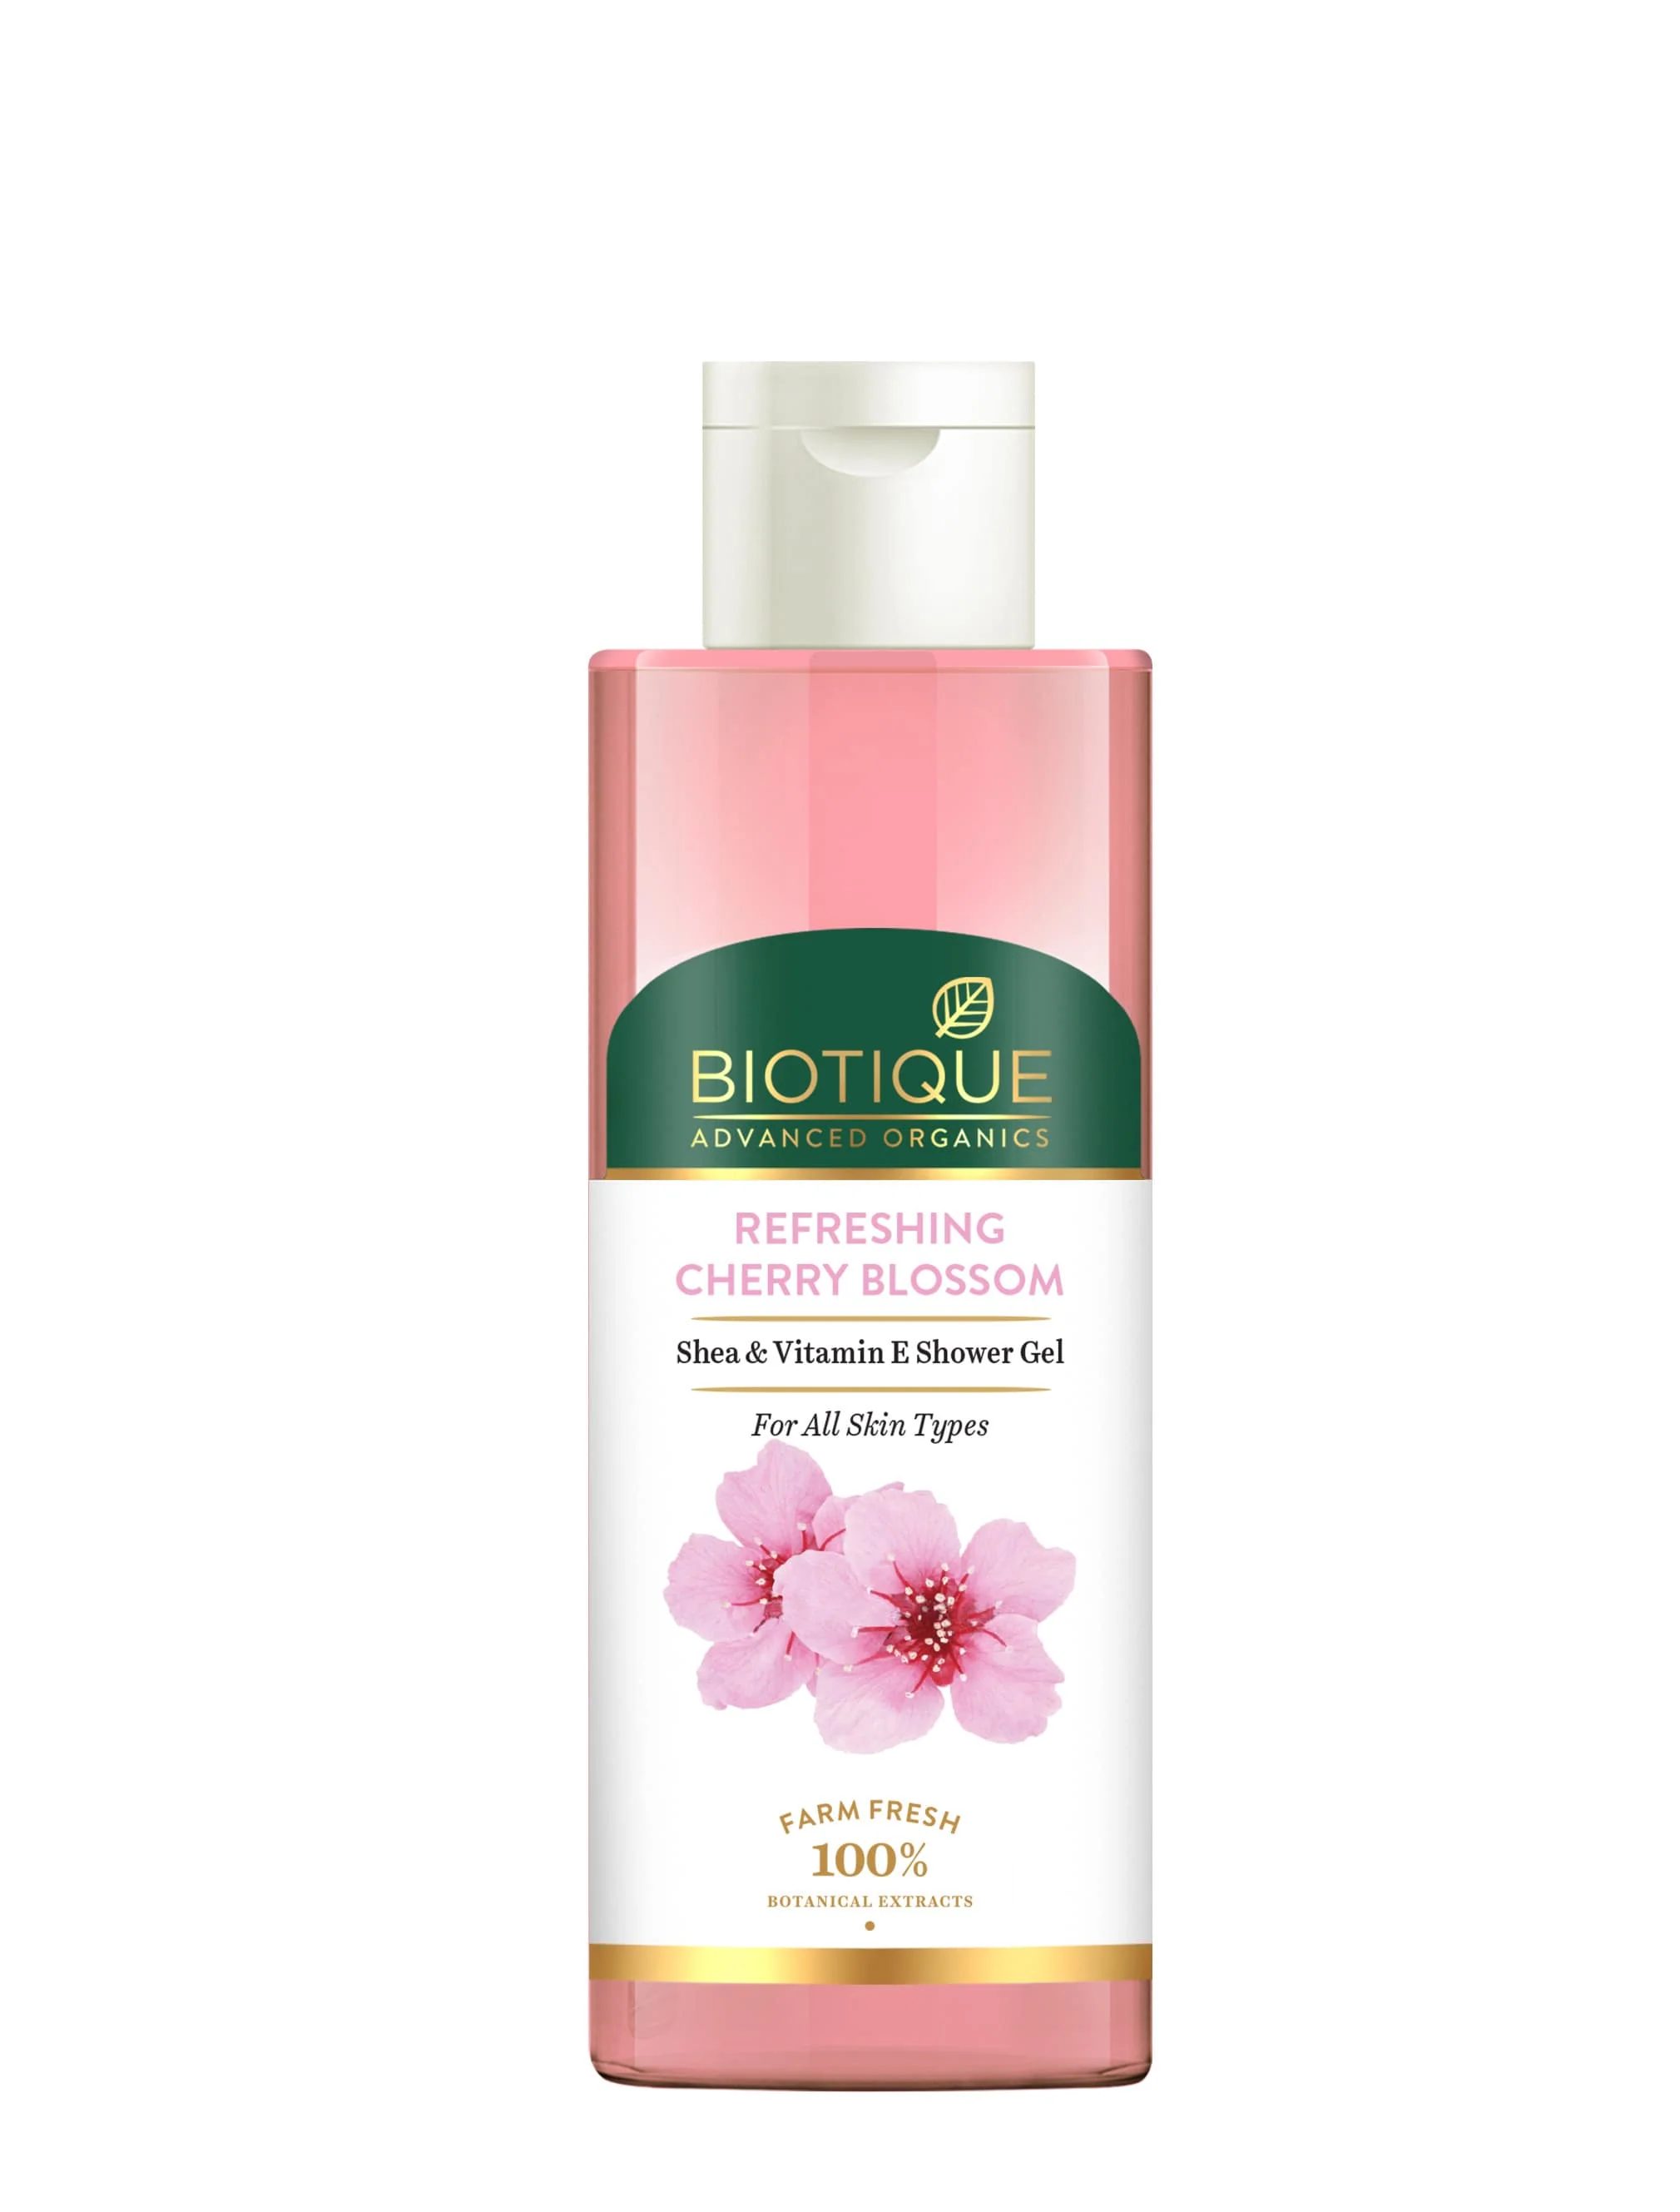 Biotique Refreshing Cherry Blossom Shea & Vitamin E Shower Gel